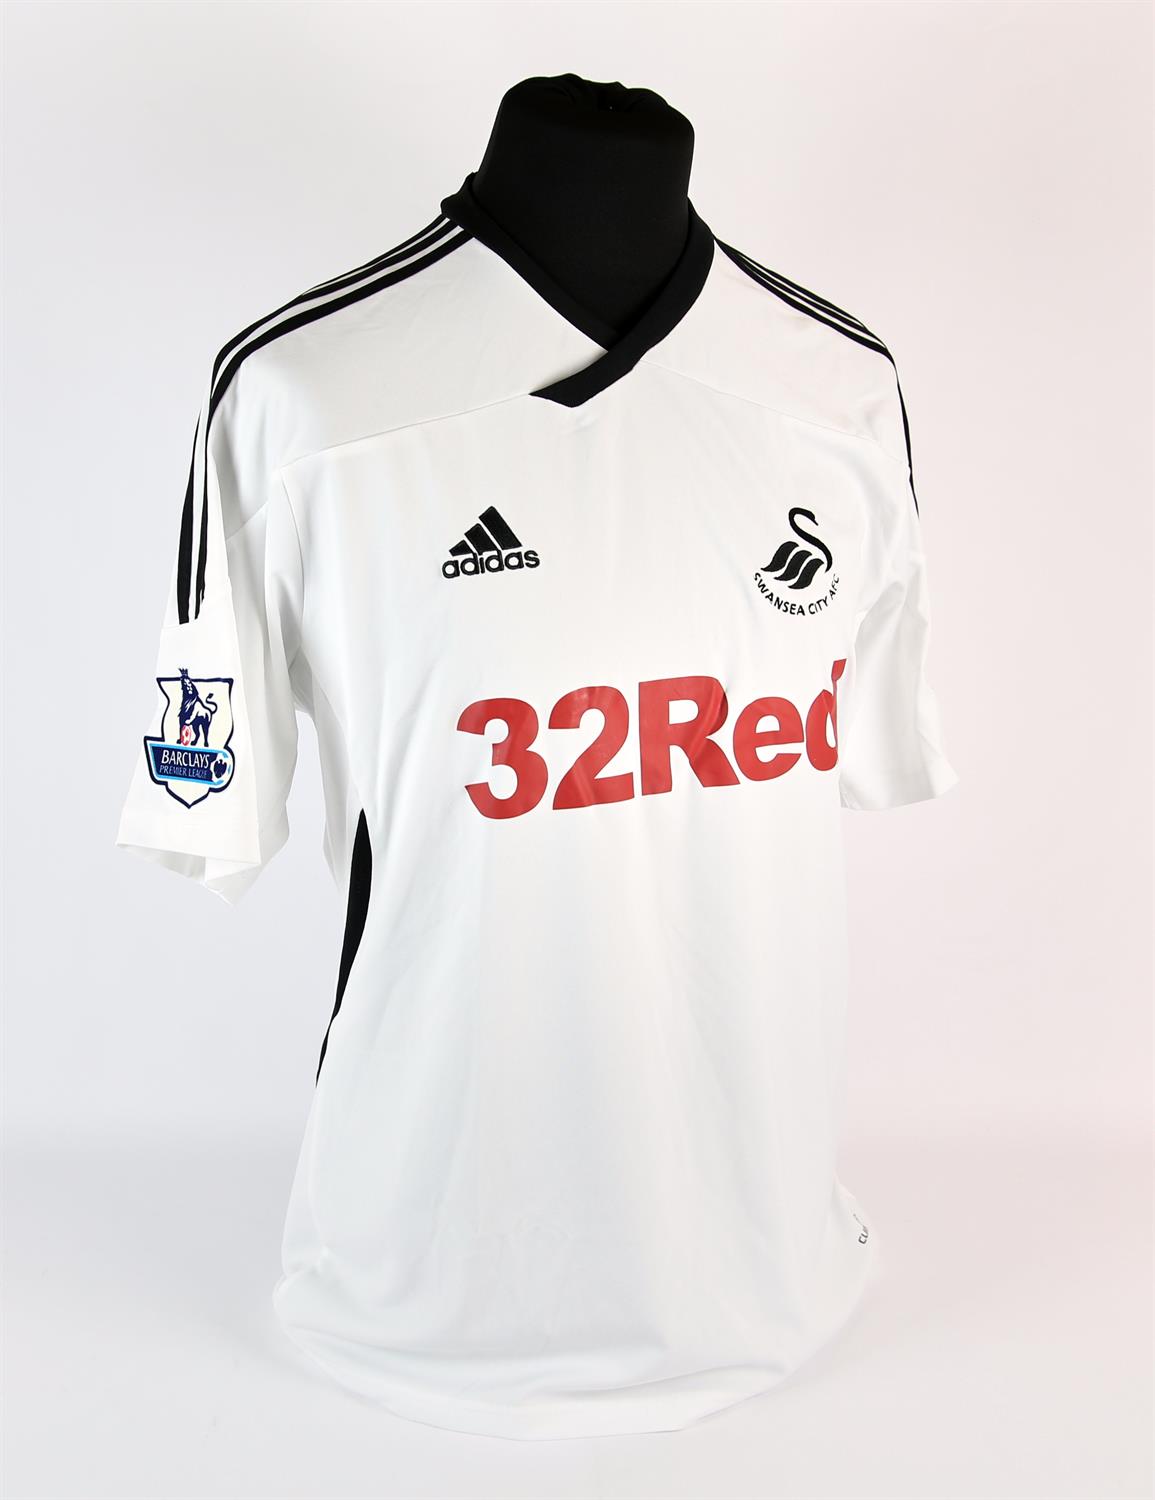 Swansea Football club, Dobbie (No.14) Season shirt from 2011-2012, S/S. Match Worn during season. - Image 2 of 2